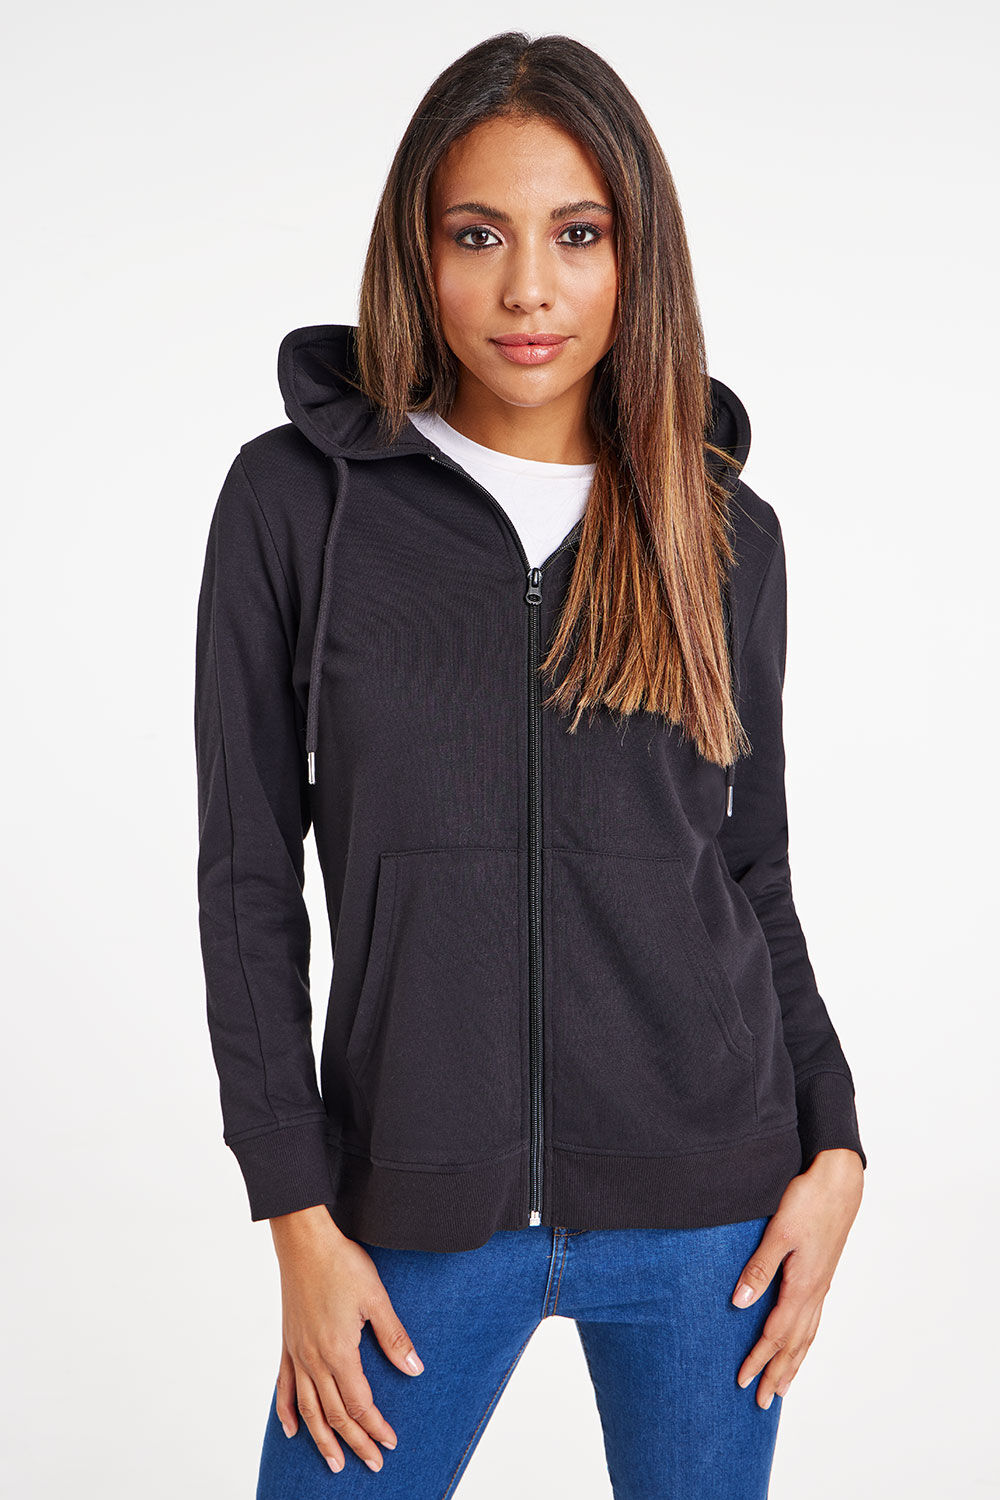 Bonmarche Black Long Sleeve Hooded Zip Through Jacket, Size: 12